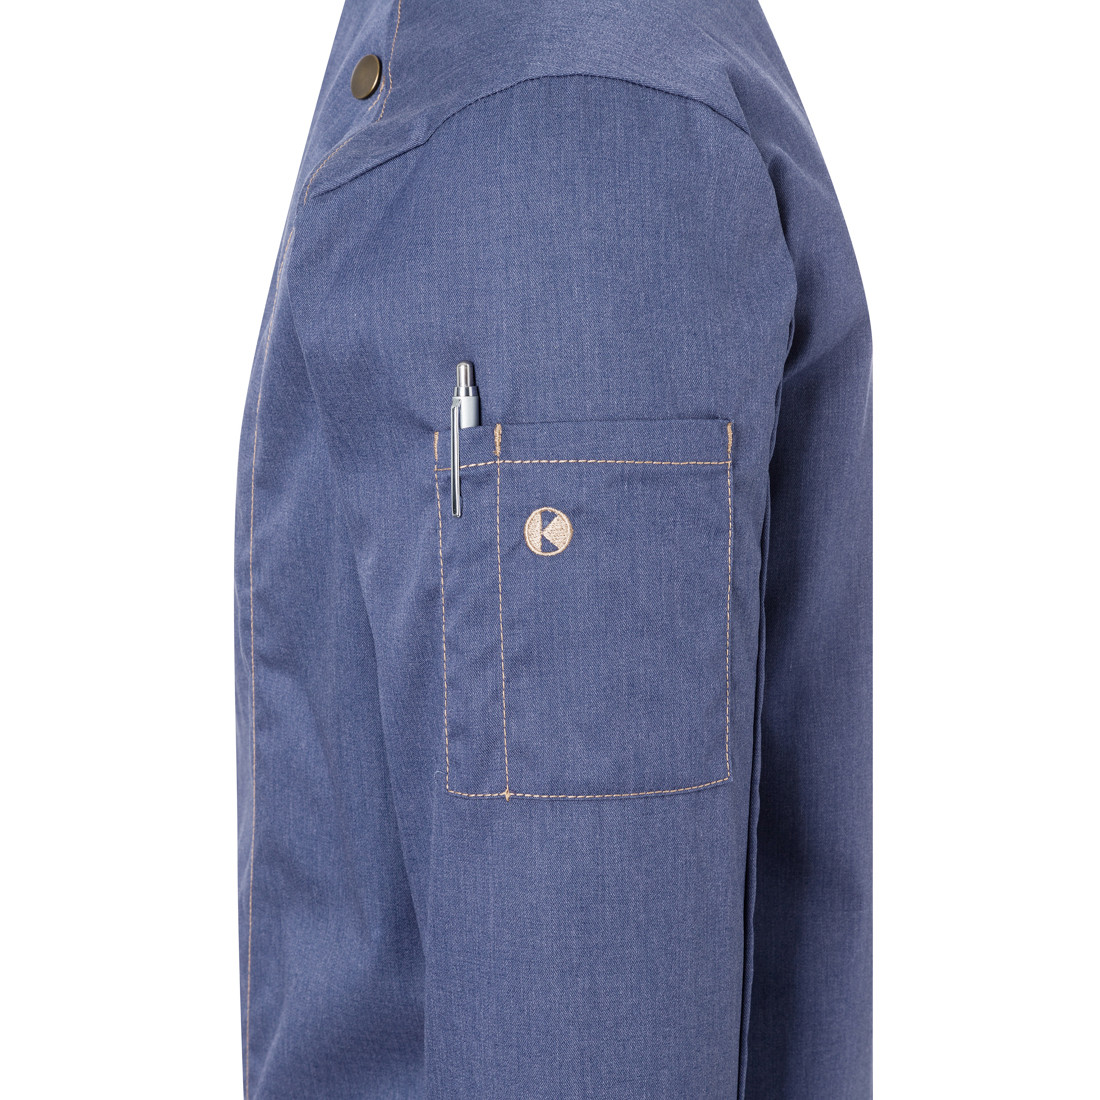 Kochjacke Jeans-Style - Arbeitskleidung